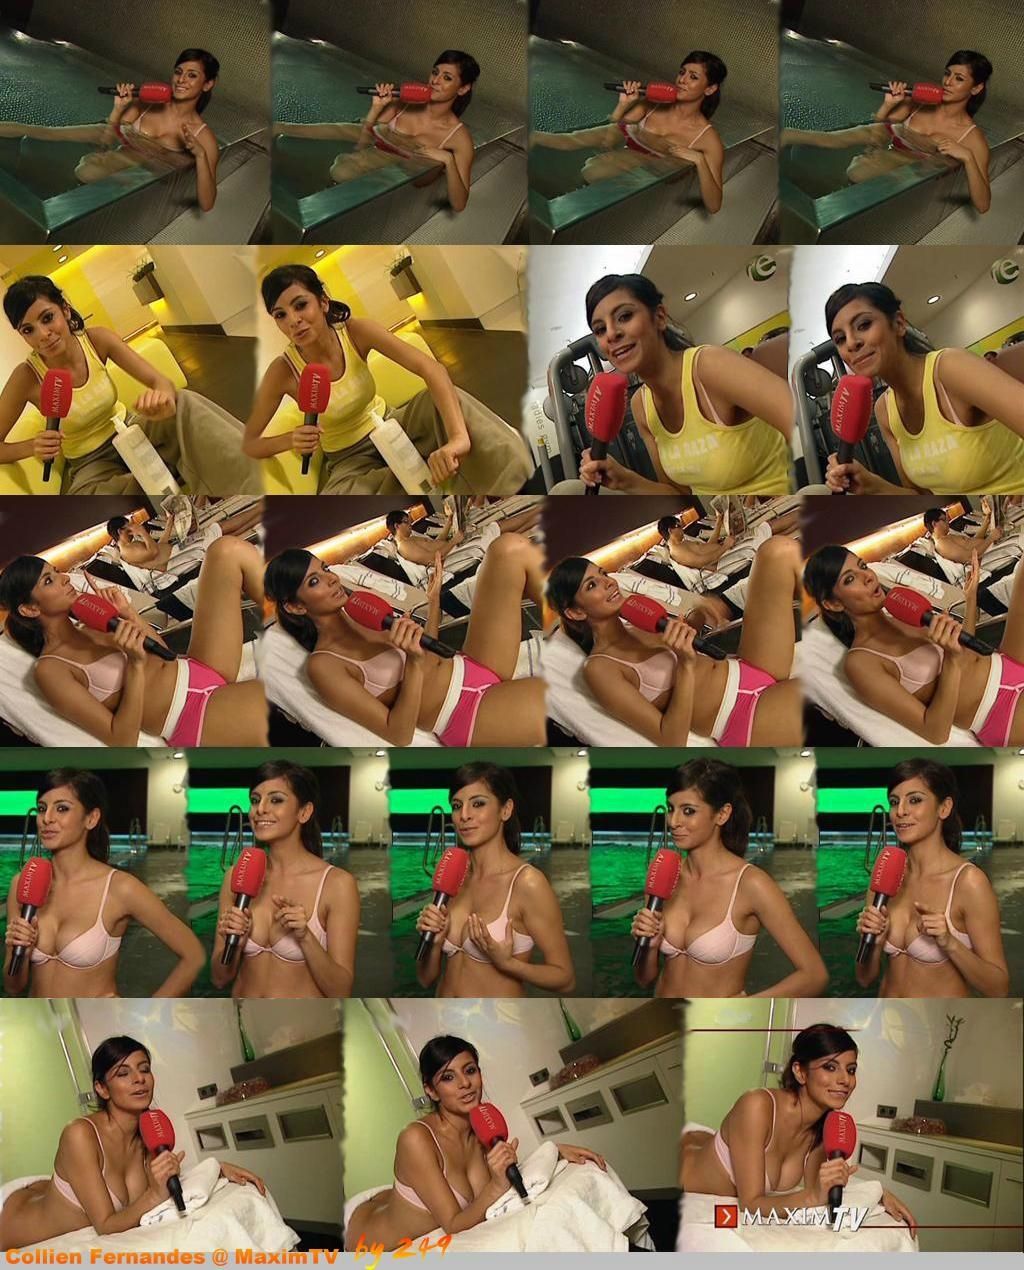 Collien Ulmen-Fernandes Sexy  Topless Collection - Part 1 (150 Photos + Videos)